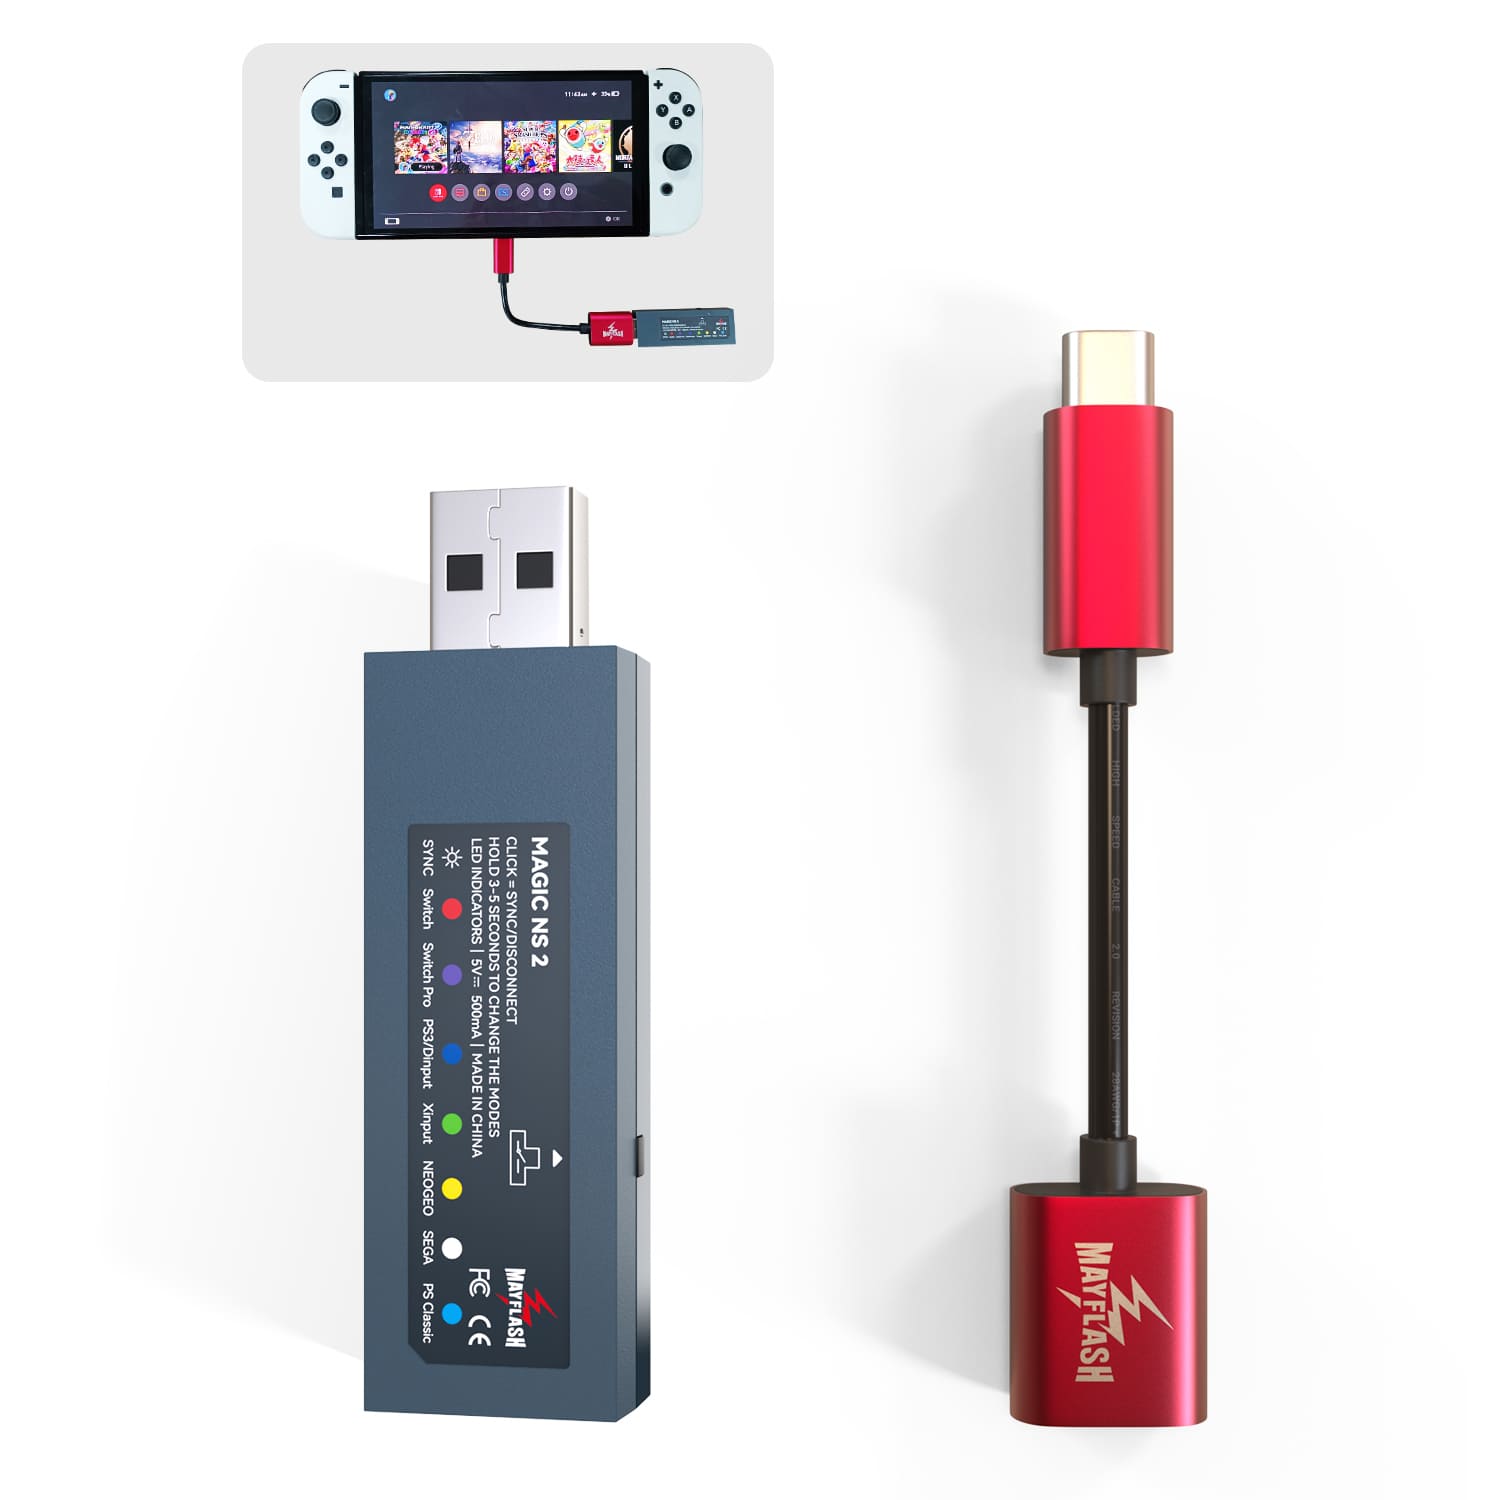 sorg propel Lamme MayFlash MAGIC NS 2 Wireless Bluetooth Controller USB Adapter for Nint